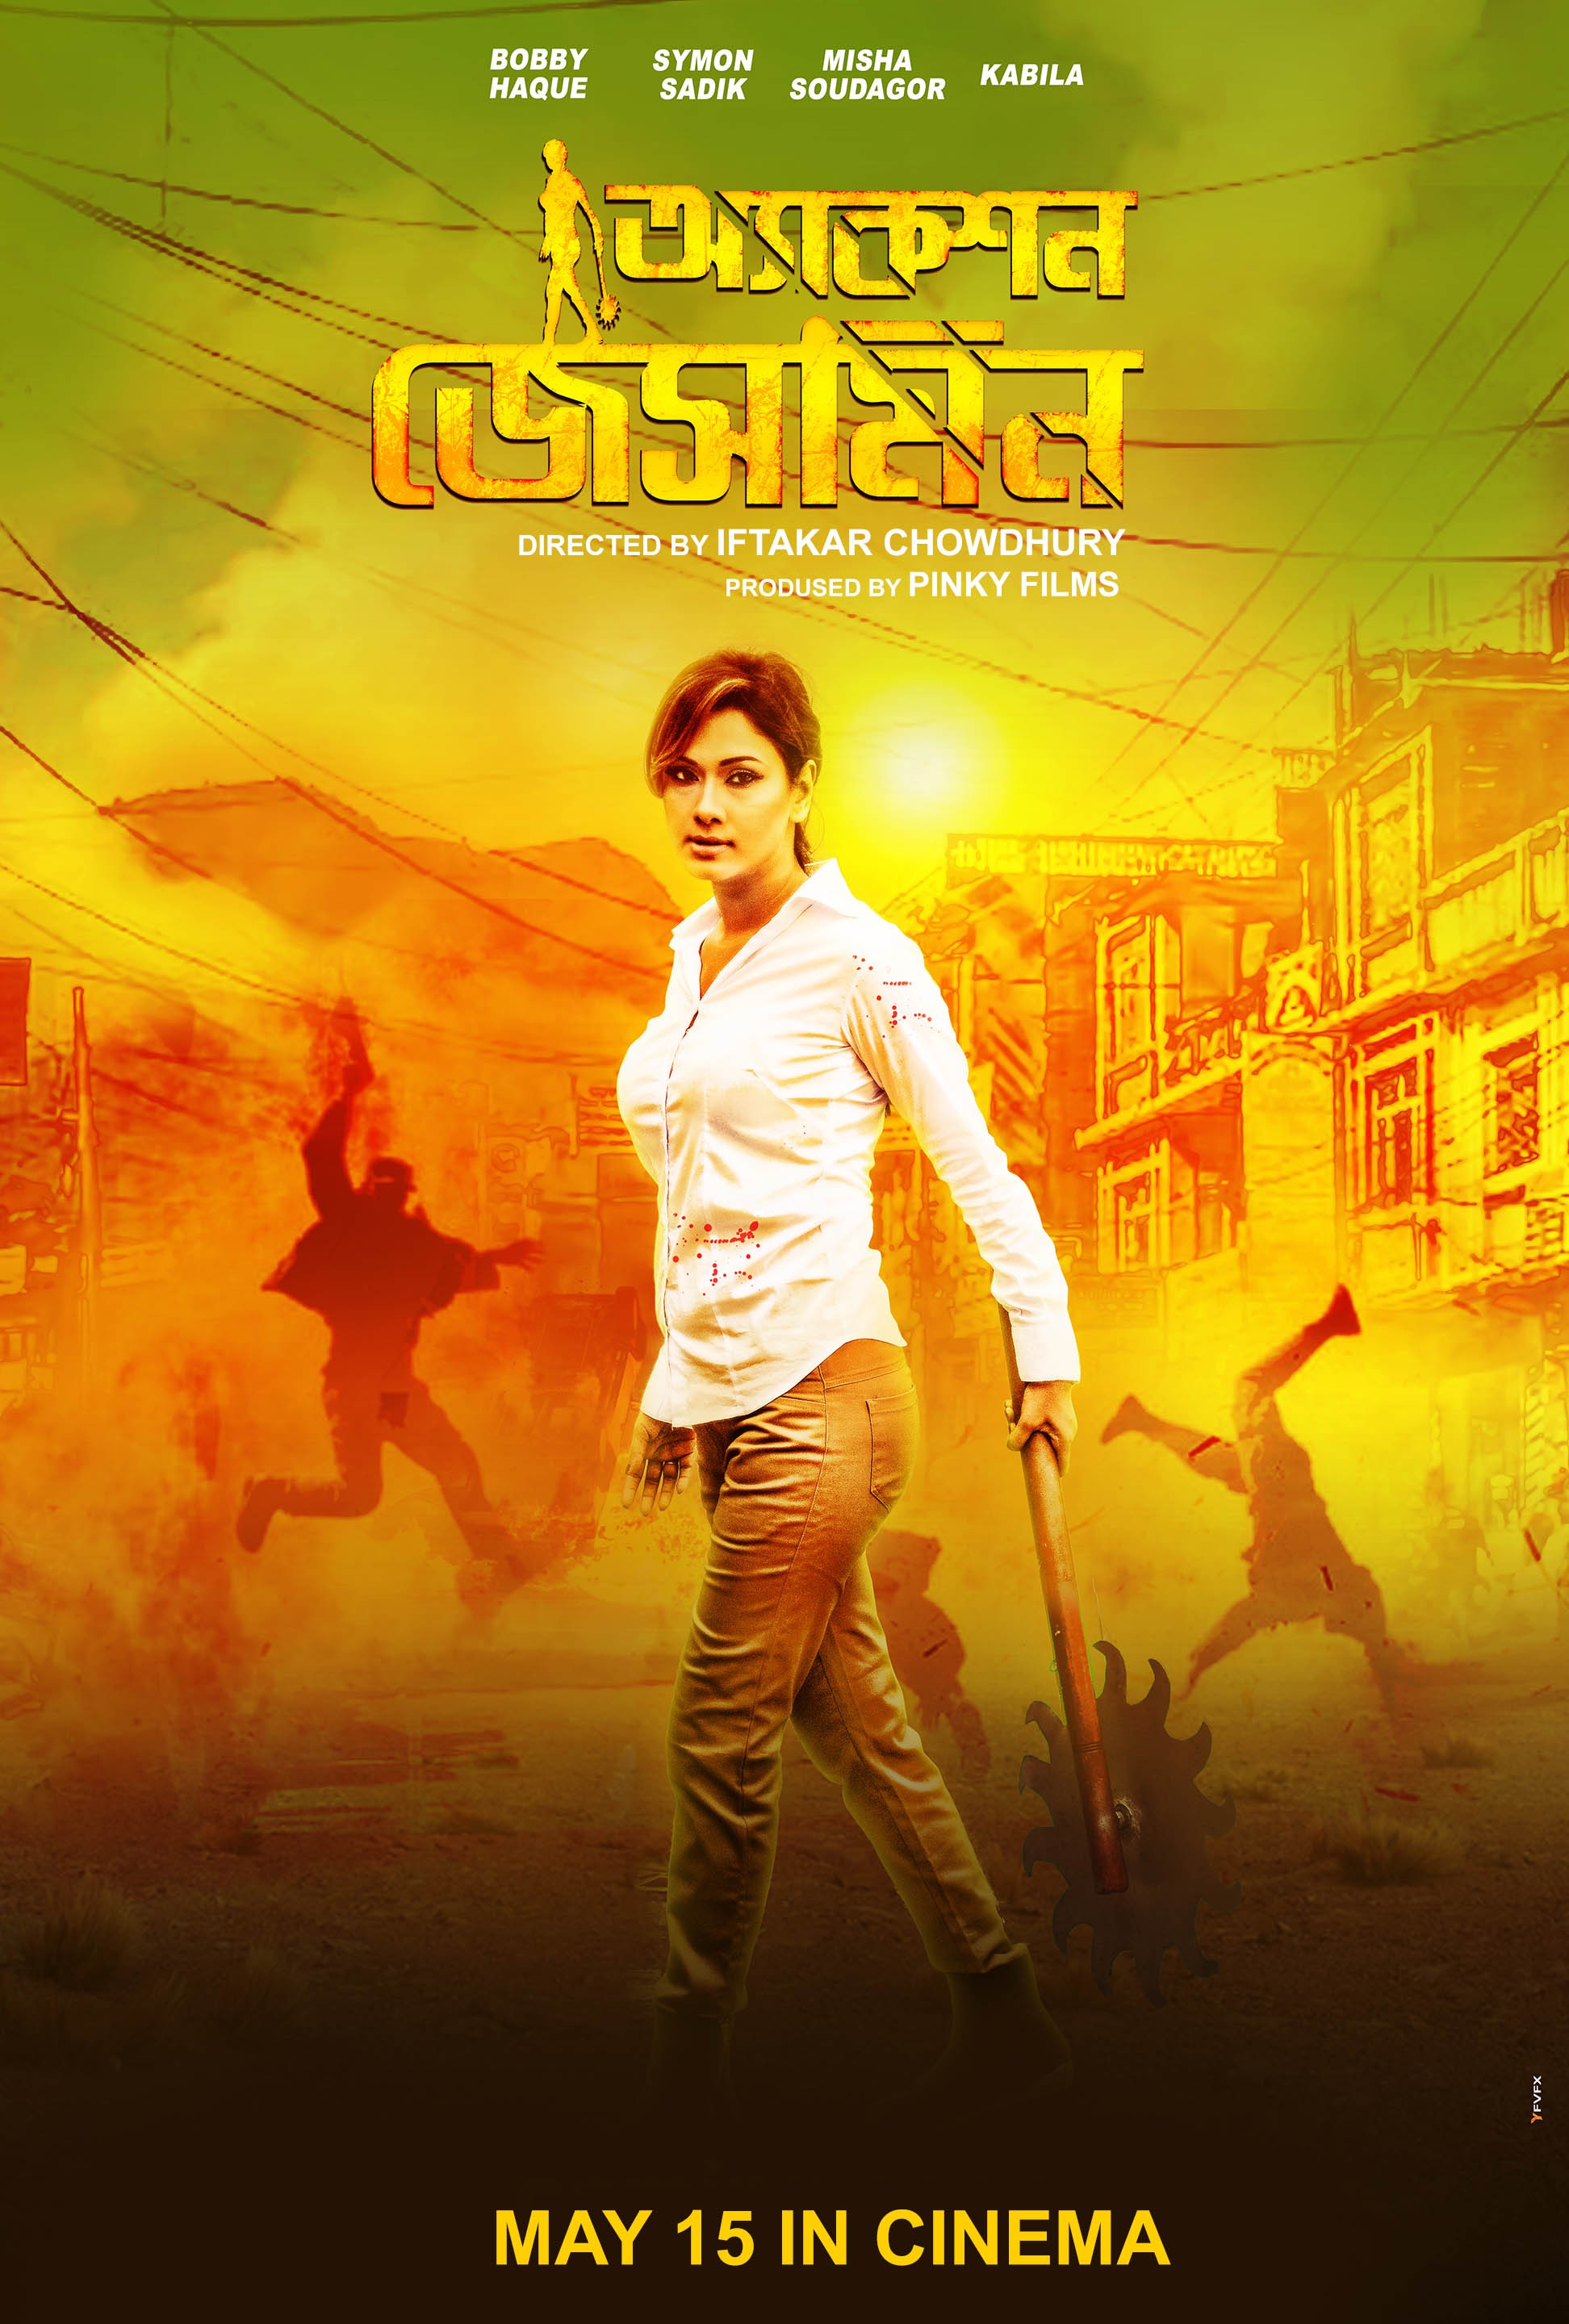 Mega Sized Movie Poster Image for Action Jasmine (#2 of 2)